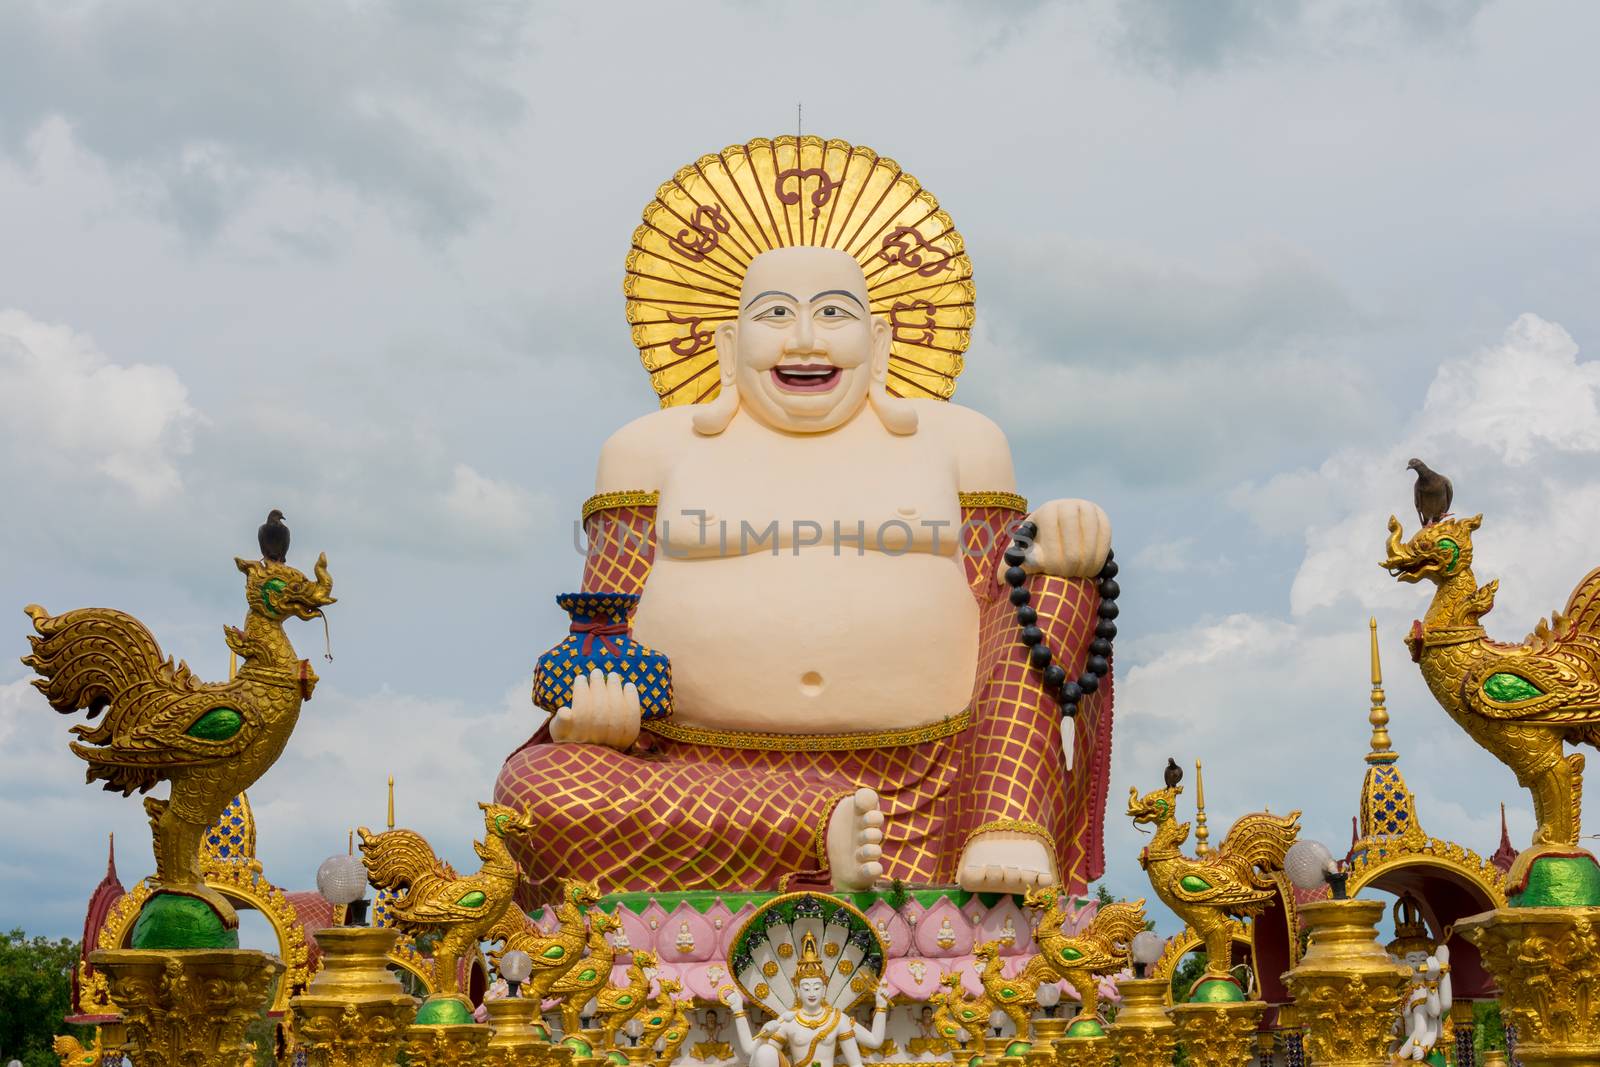 Statue at Big Buddha area by nicousnake